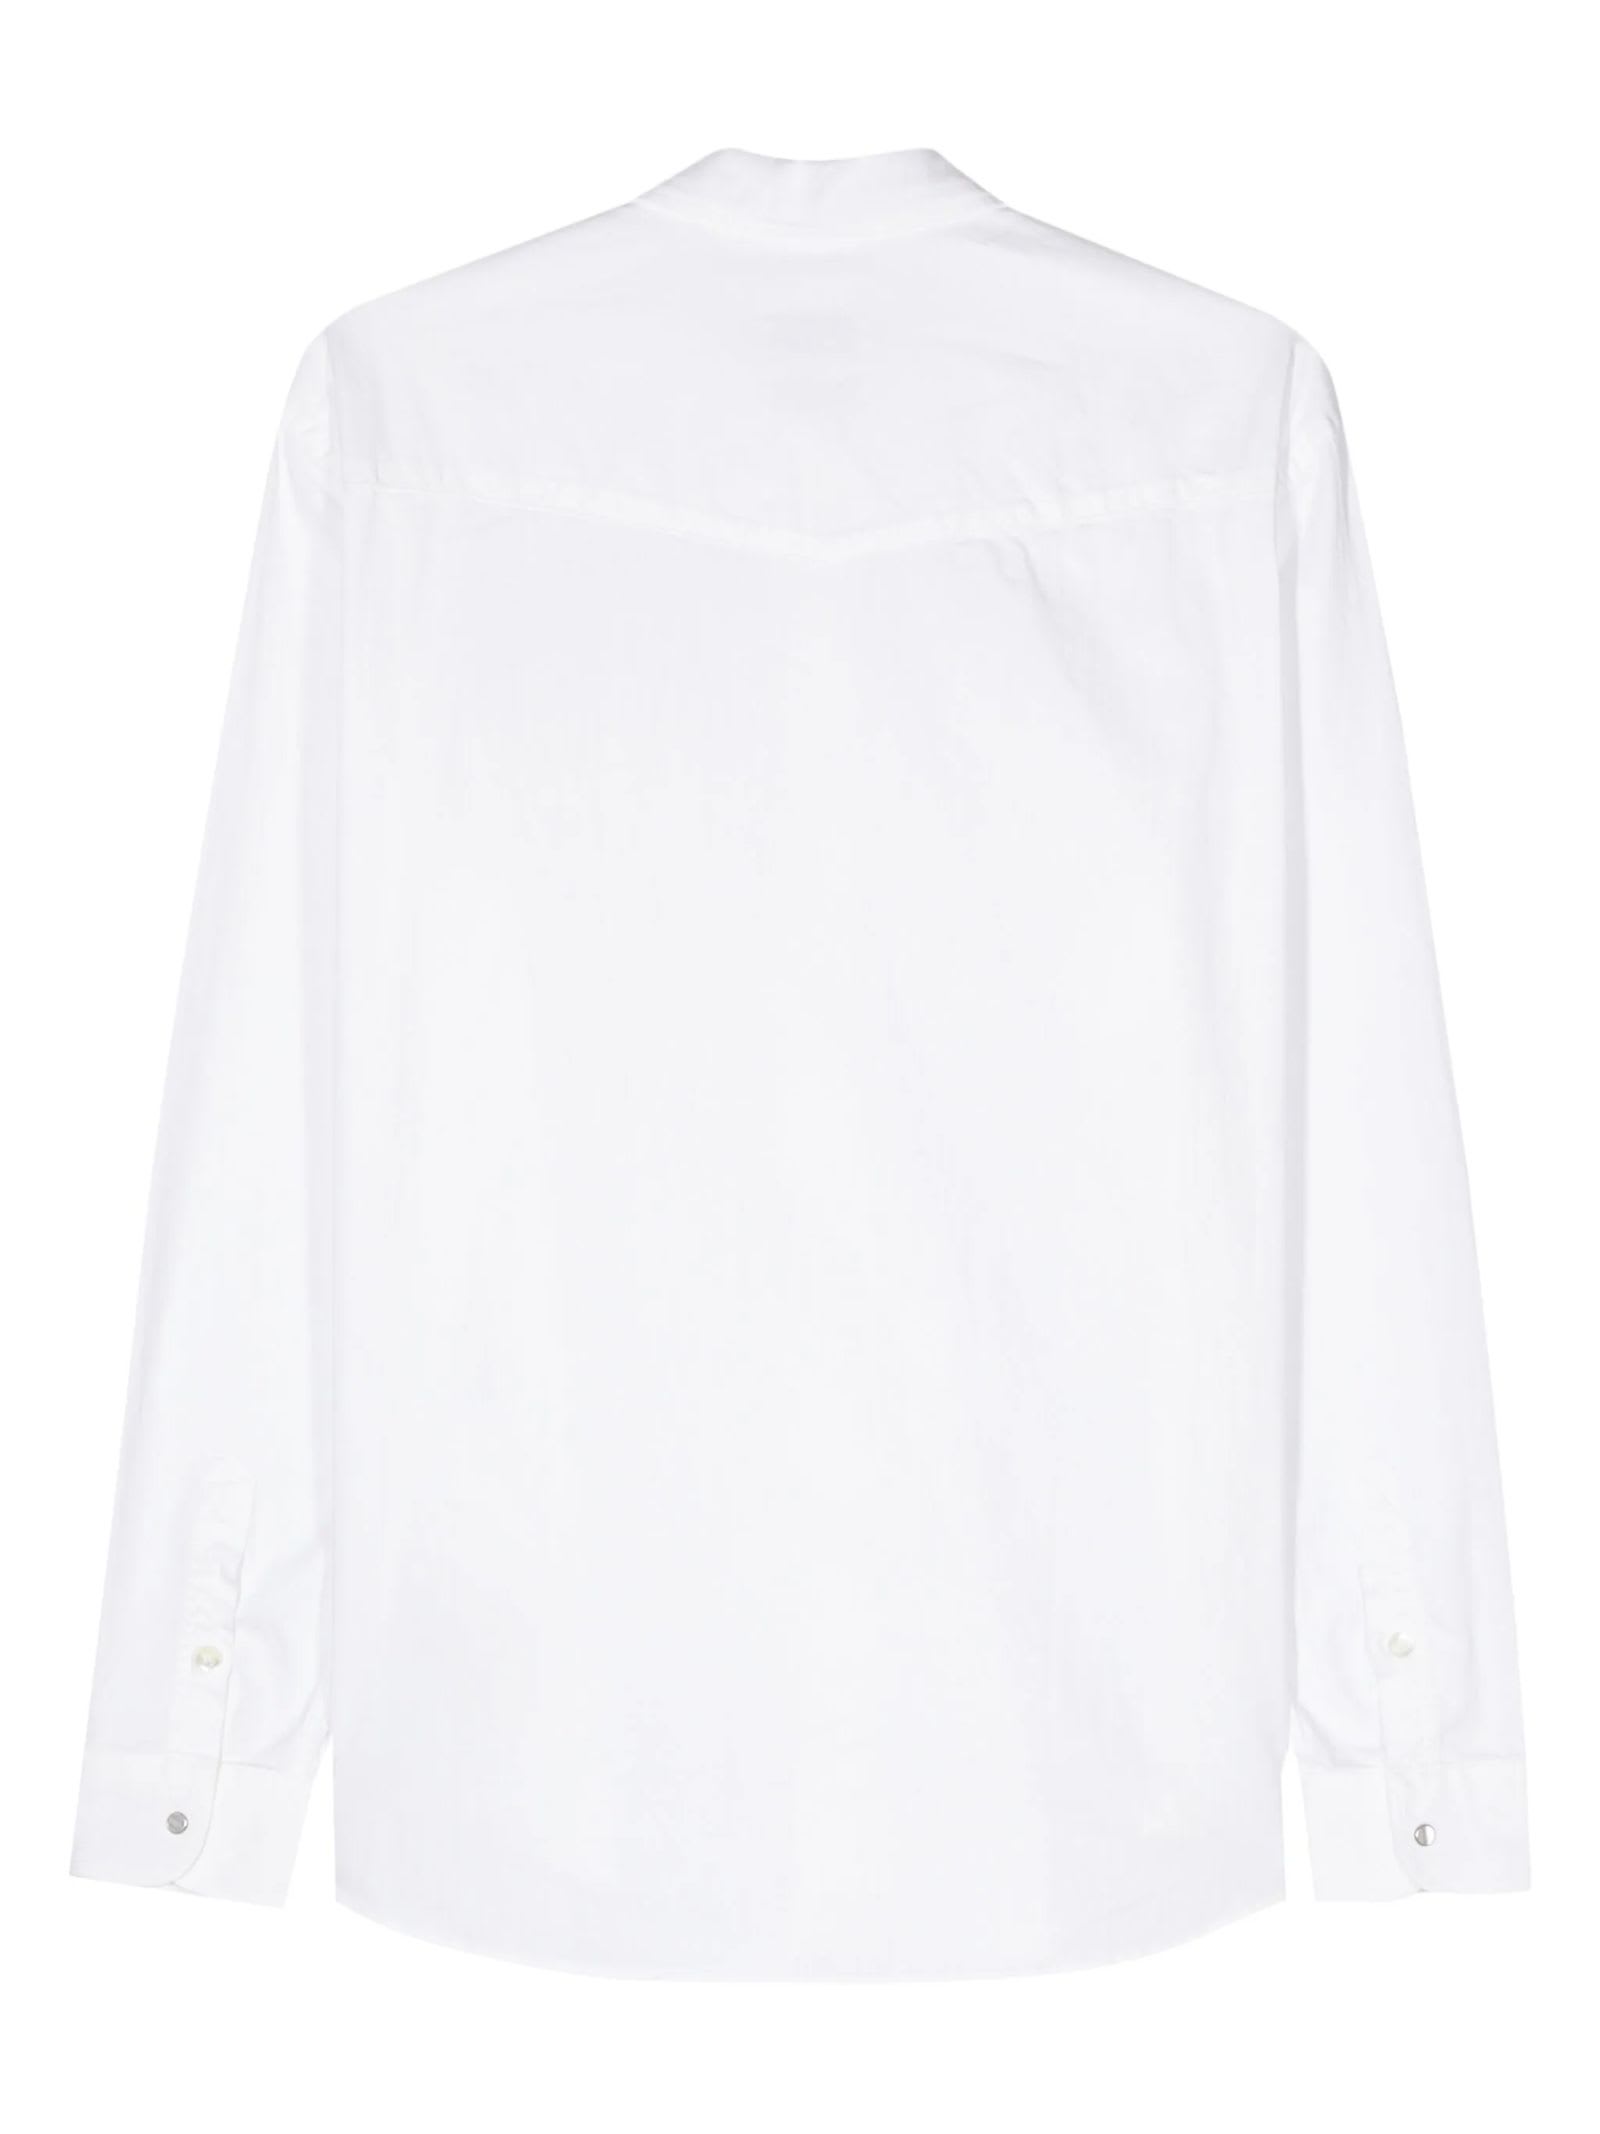 Shop Dondup Shirts White